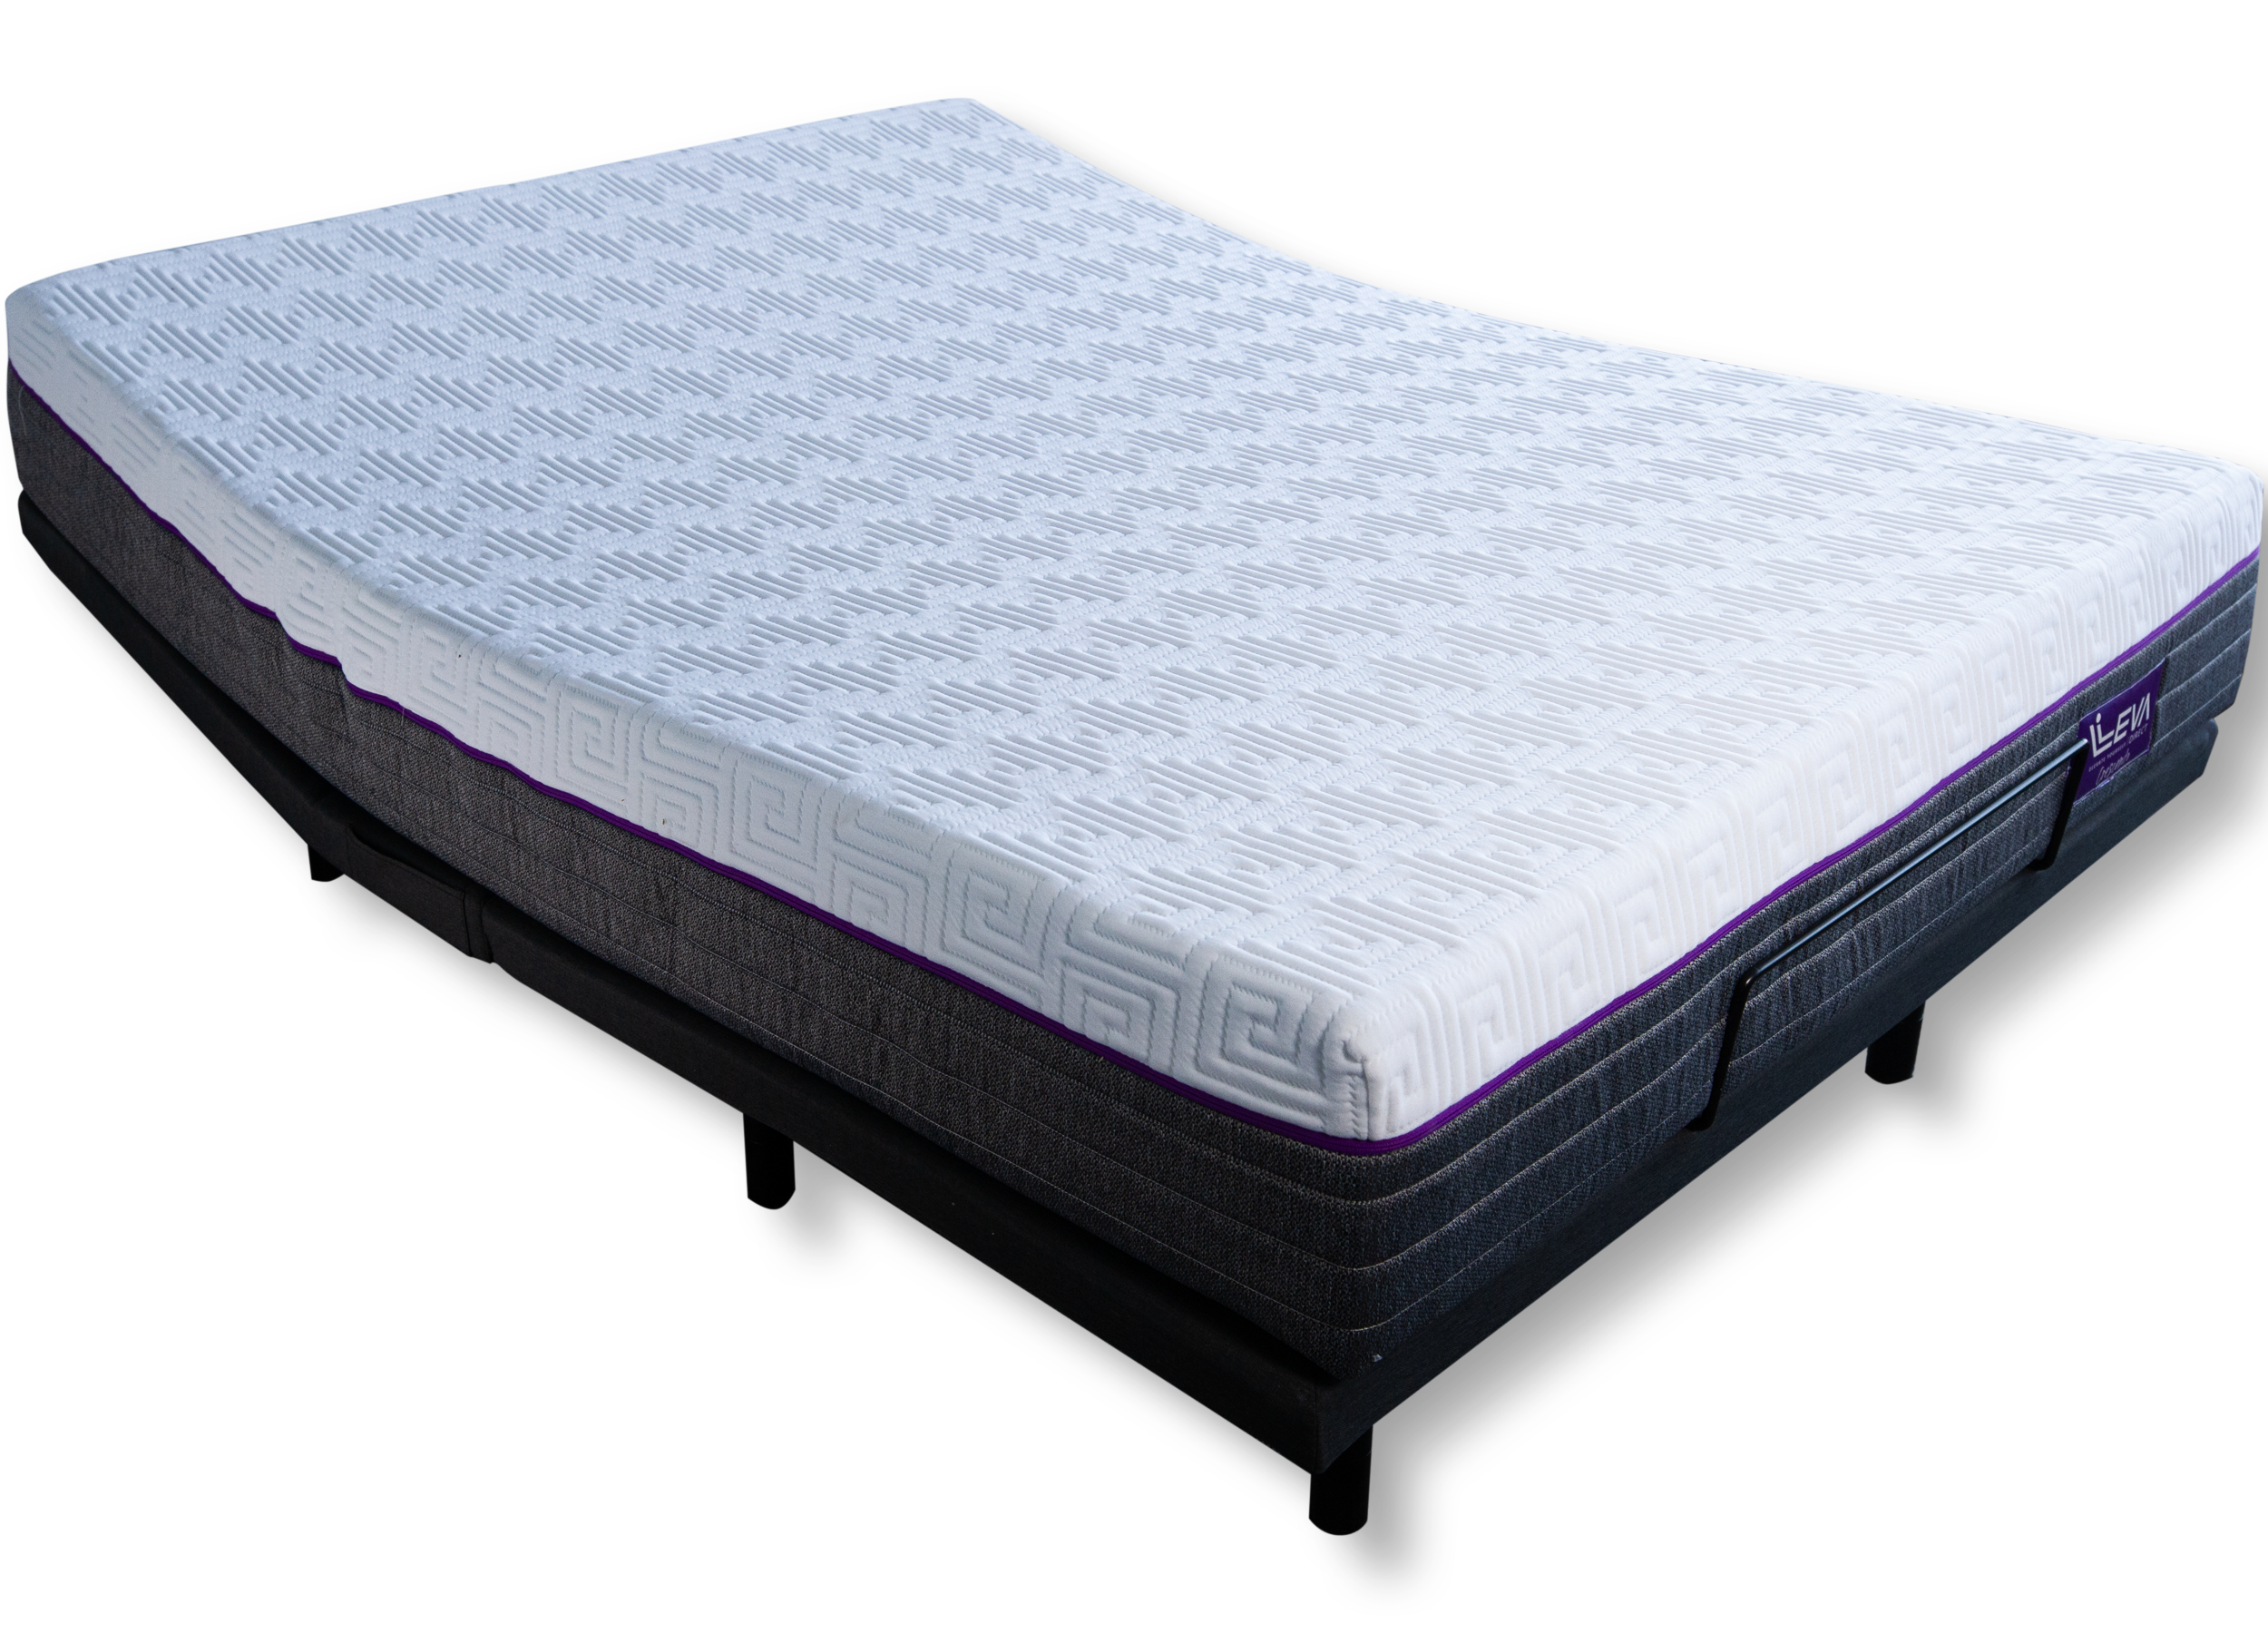 Crescendo Full Adjustable Bed Package